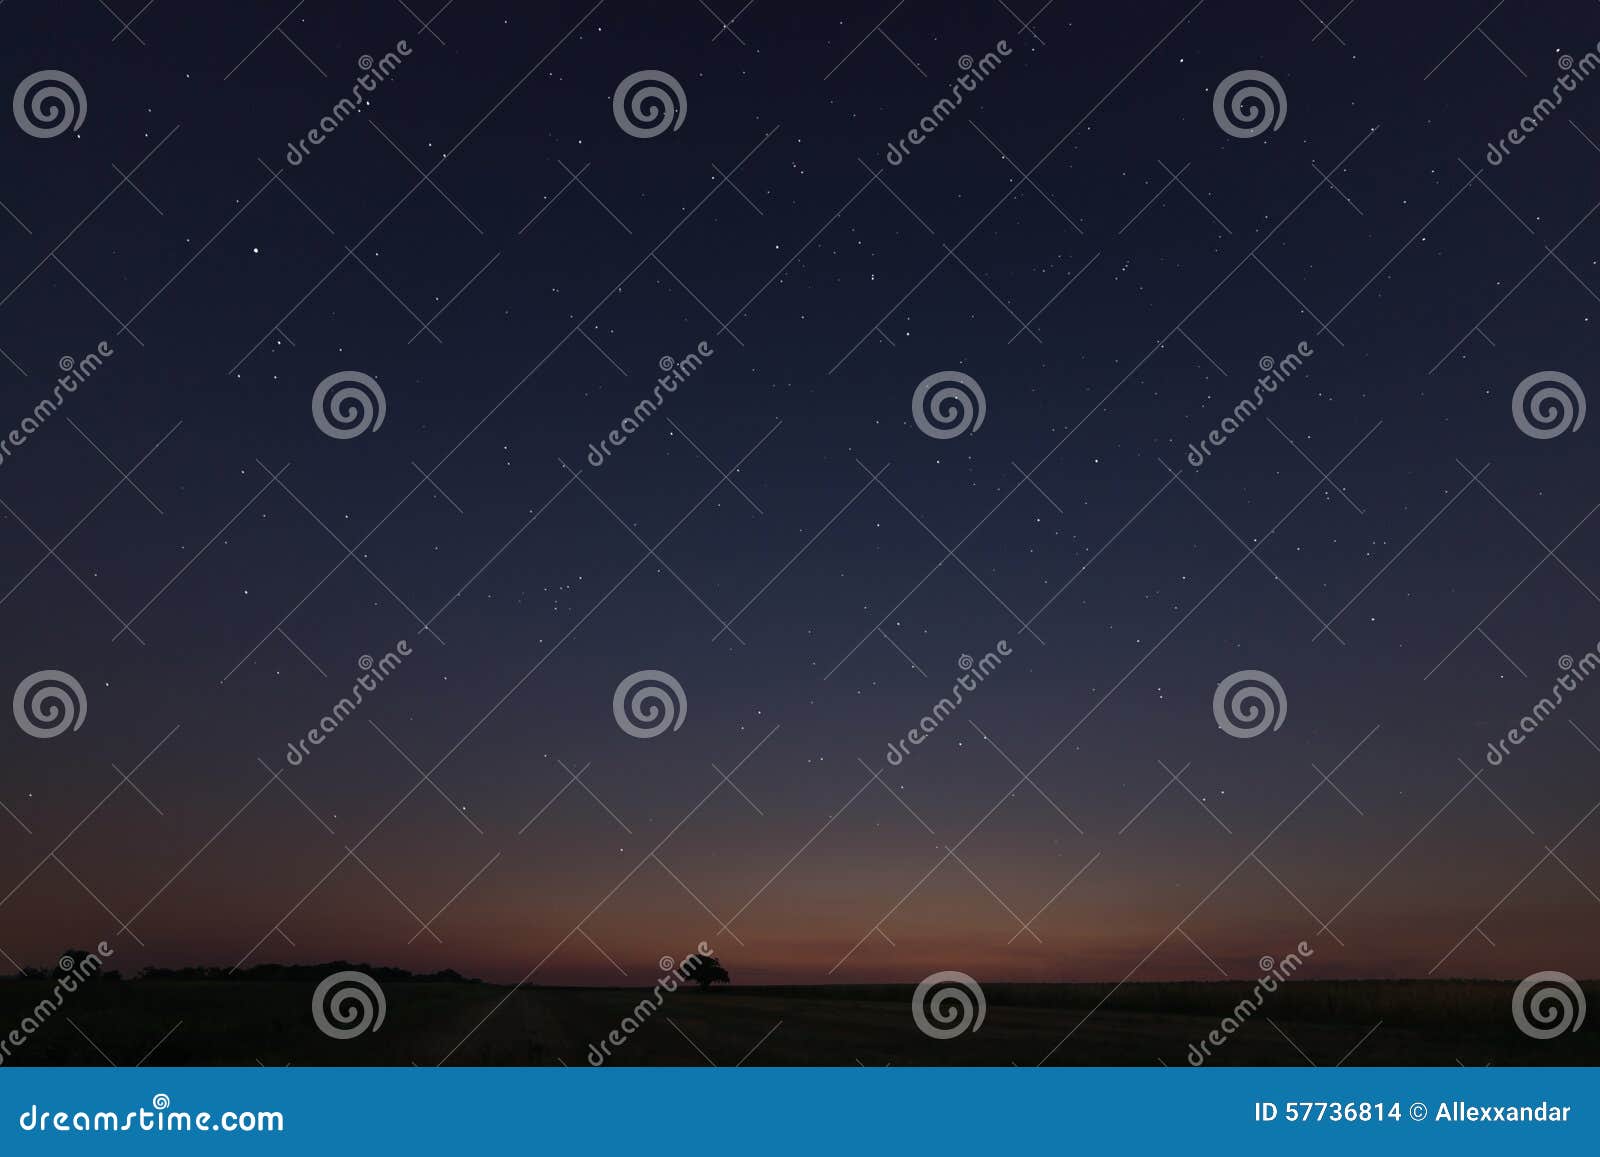 beautiful star field at sunset